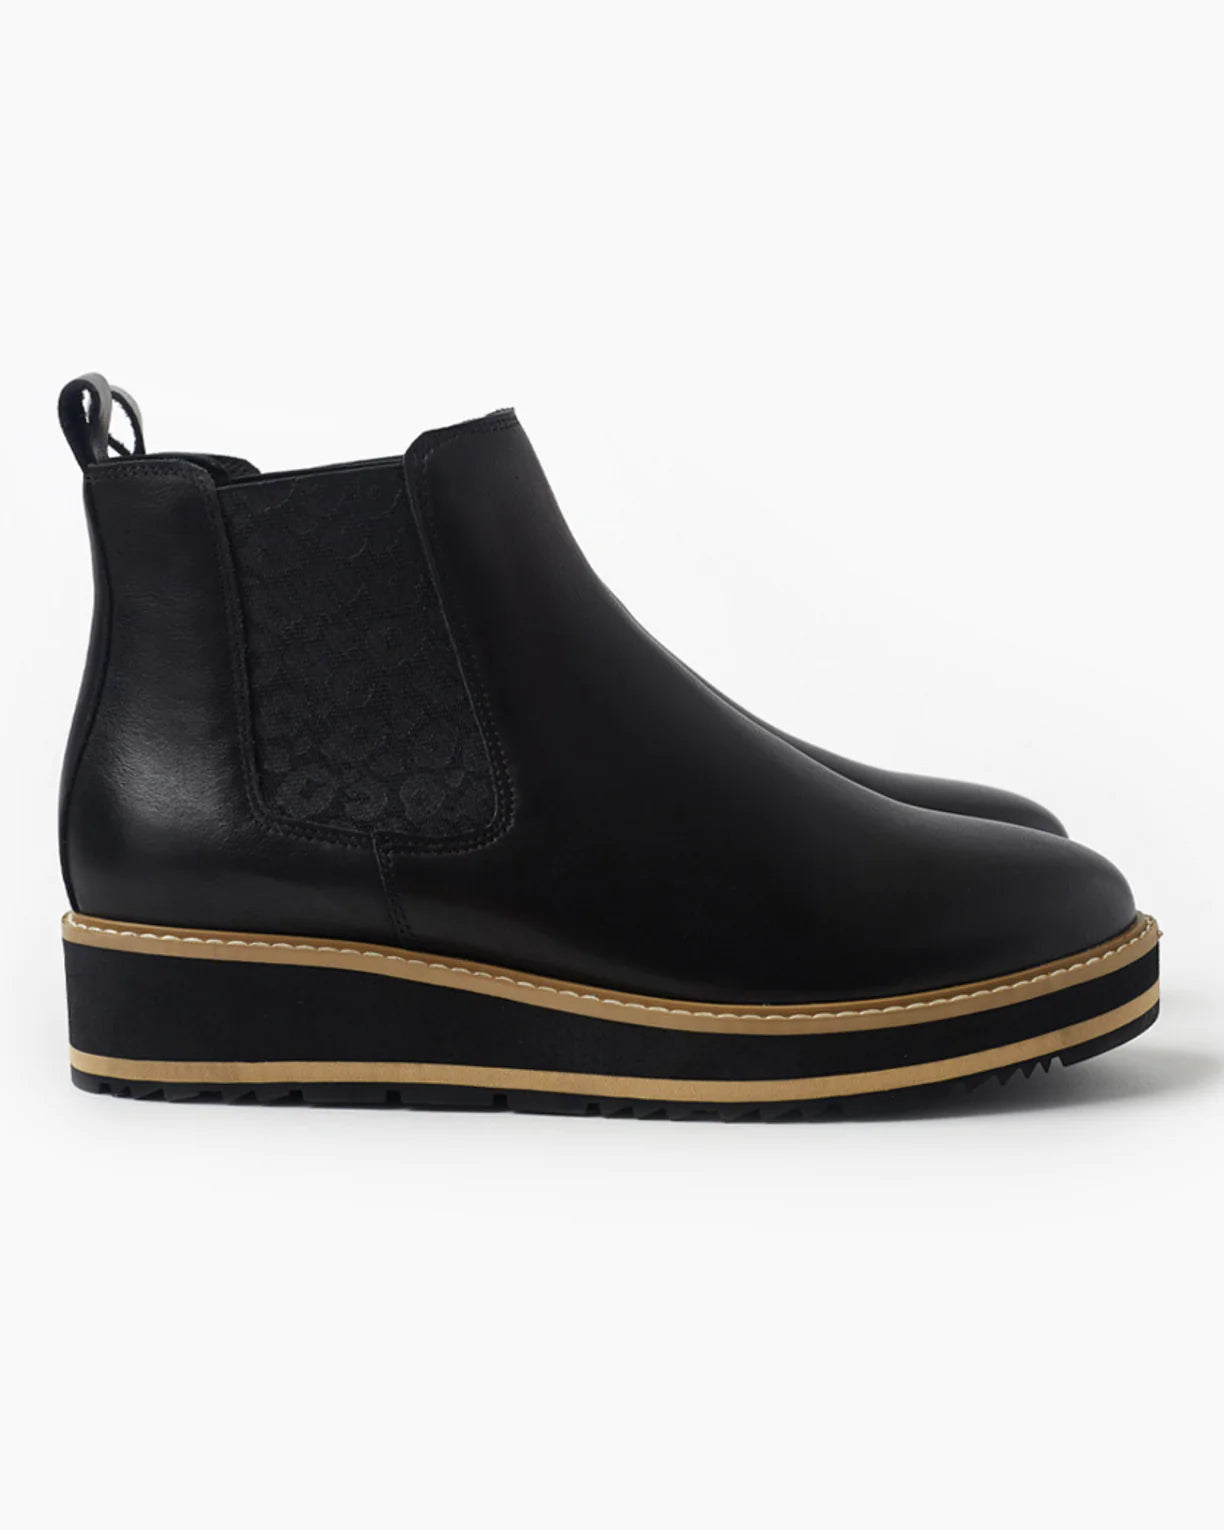 Walnut Melbourne - Jade Leather boot in Black